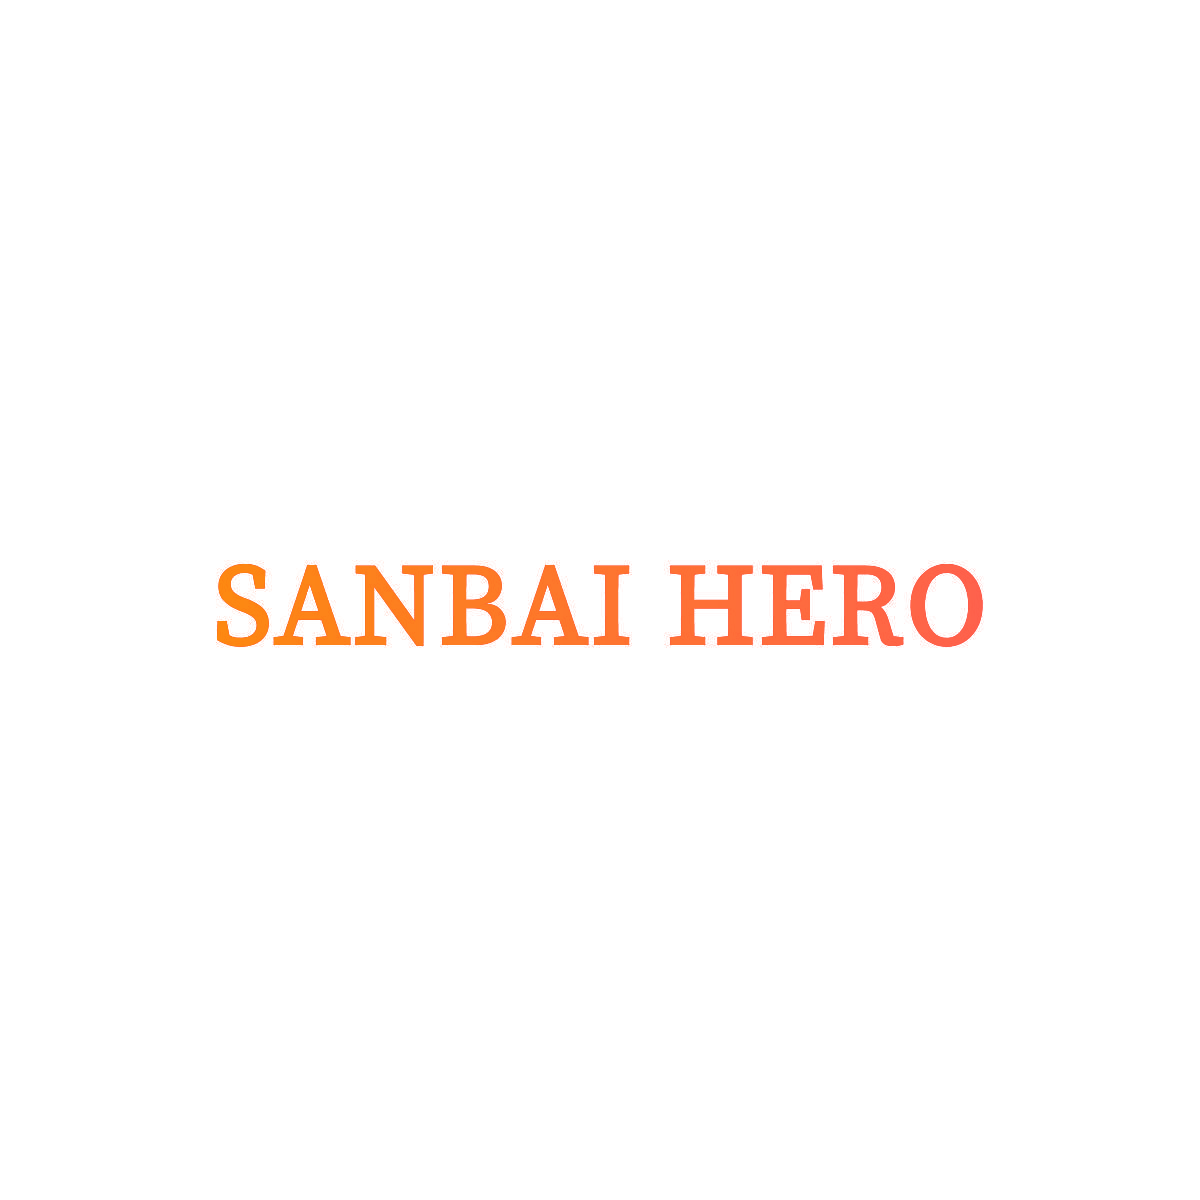 SANBAI HERO